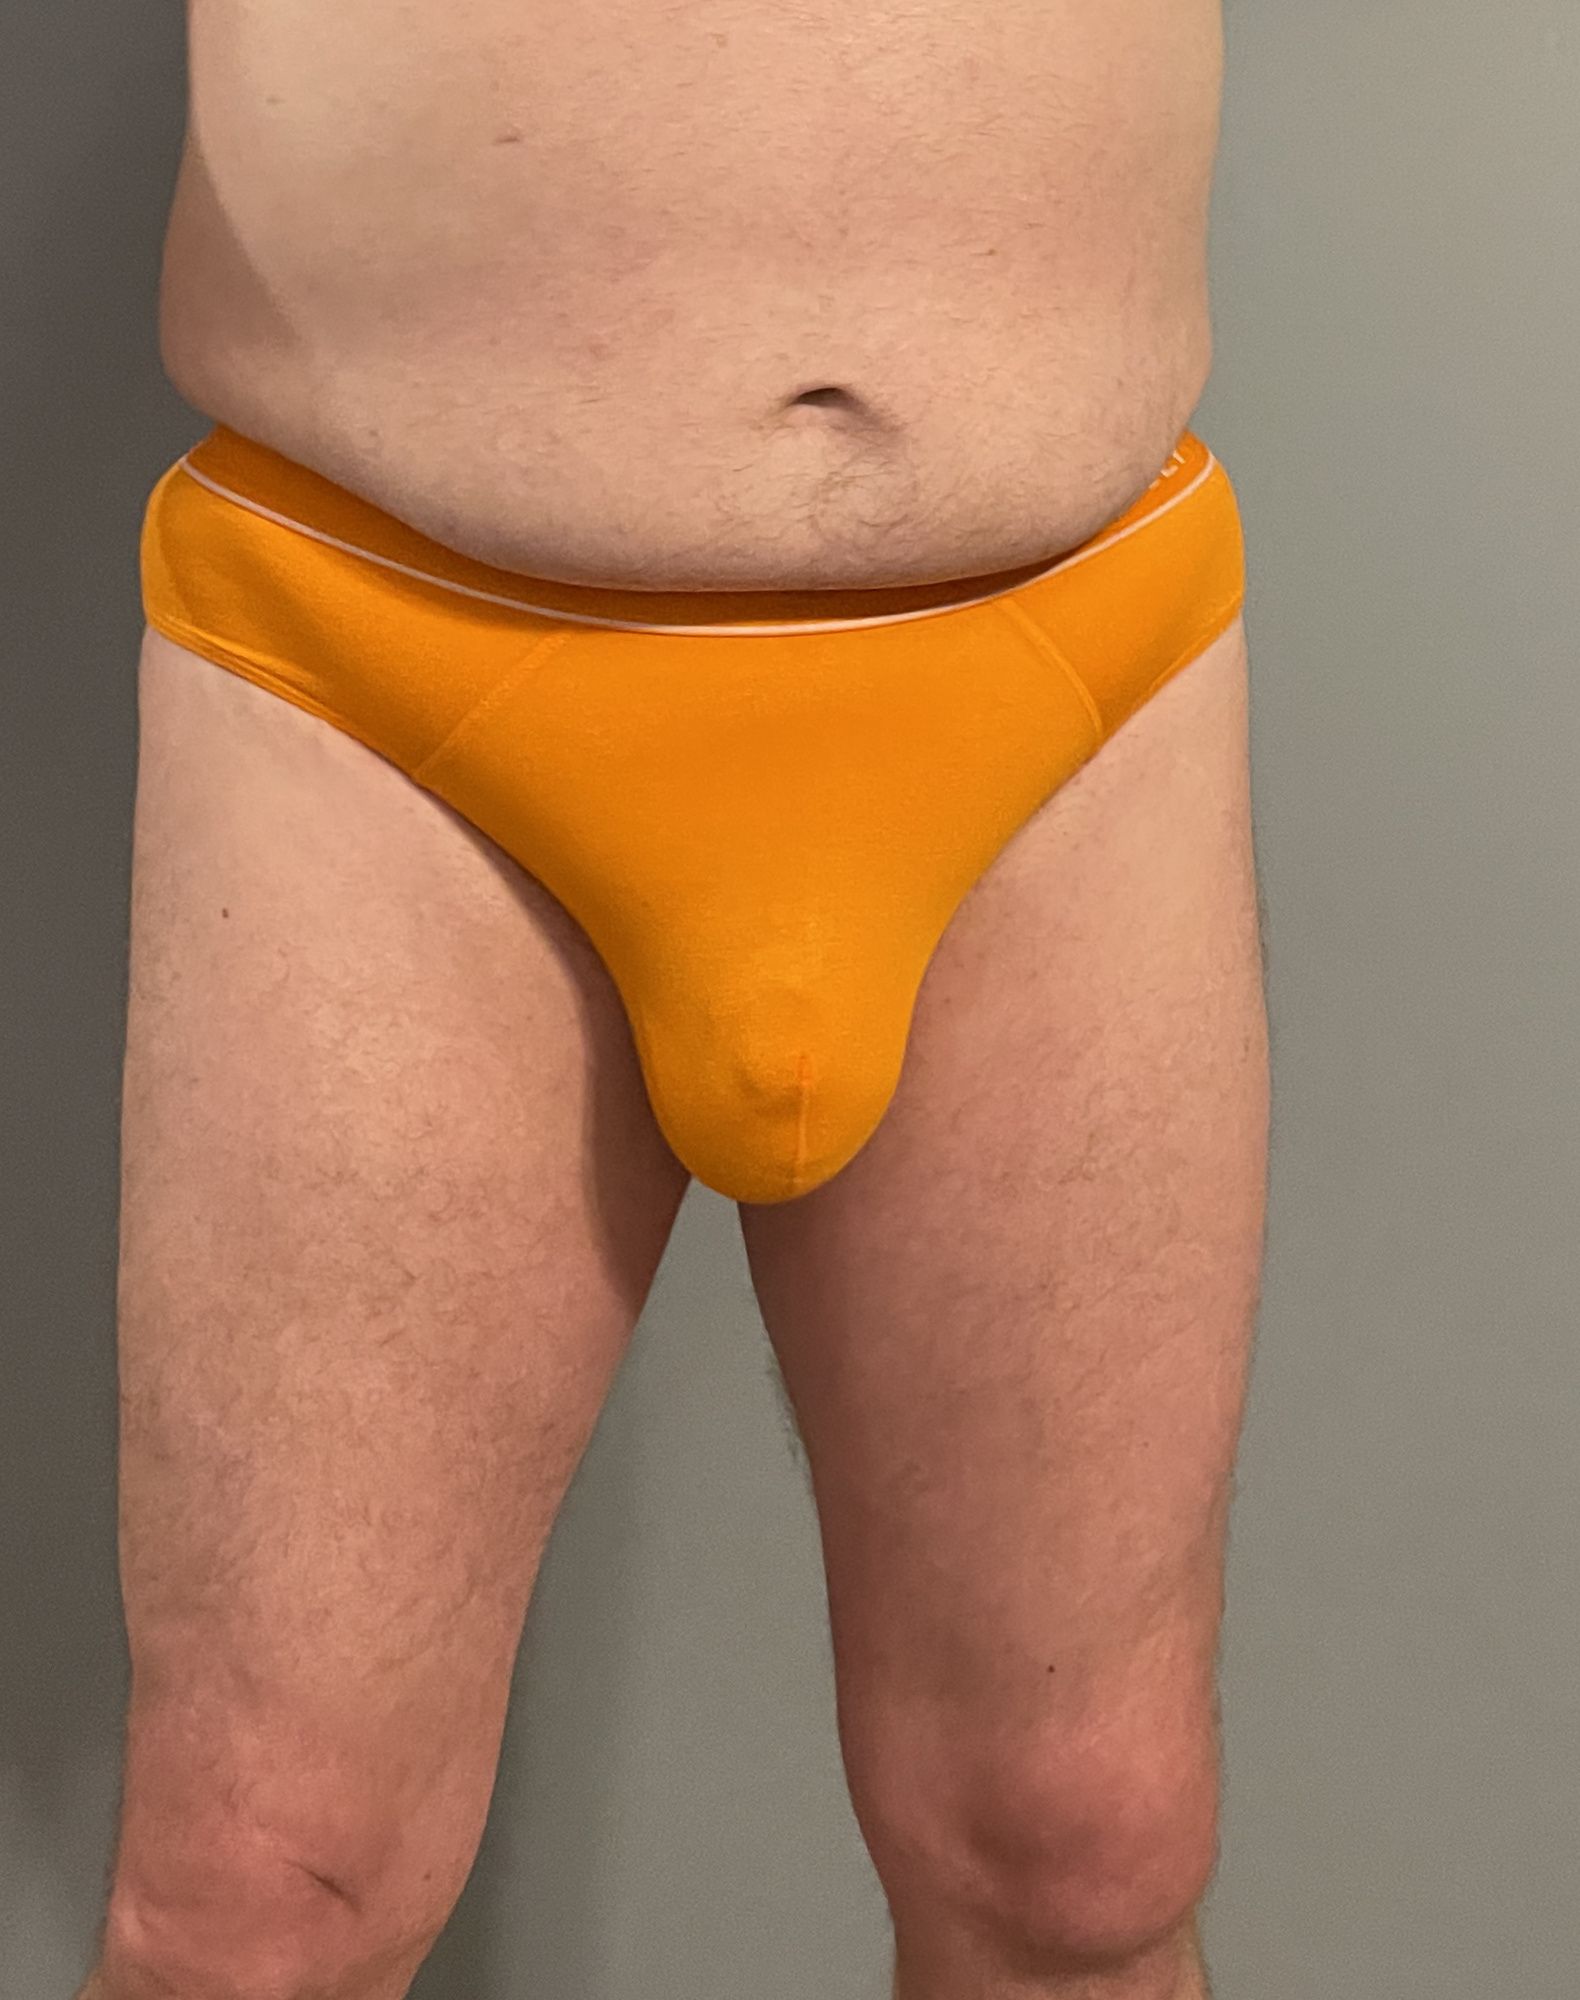 Chubby Guy in Underwear #16